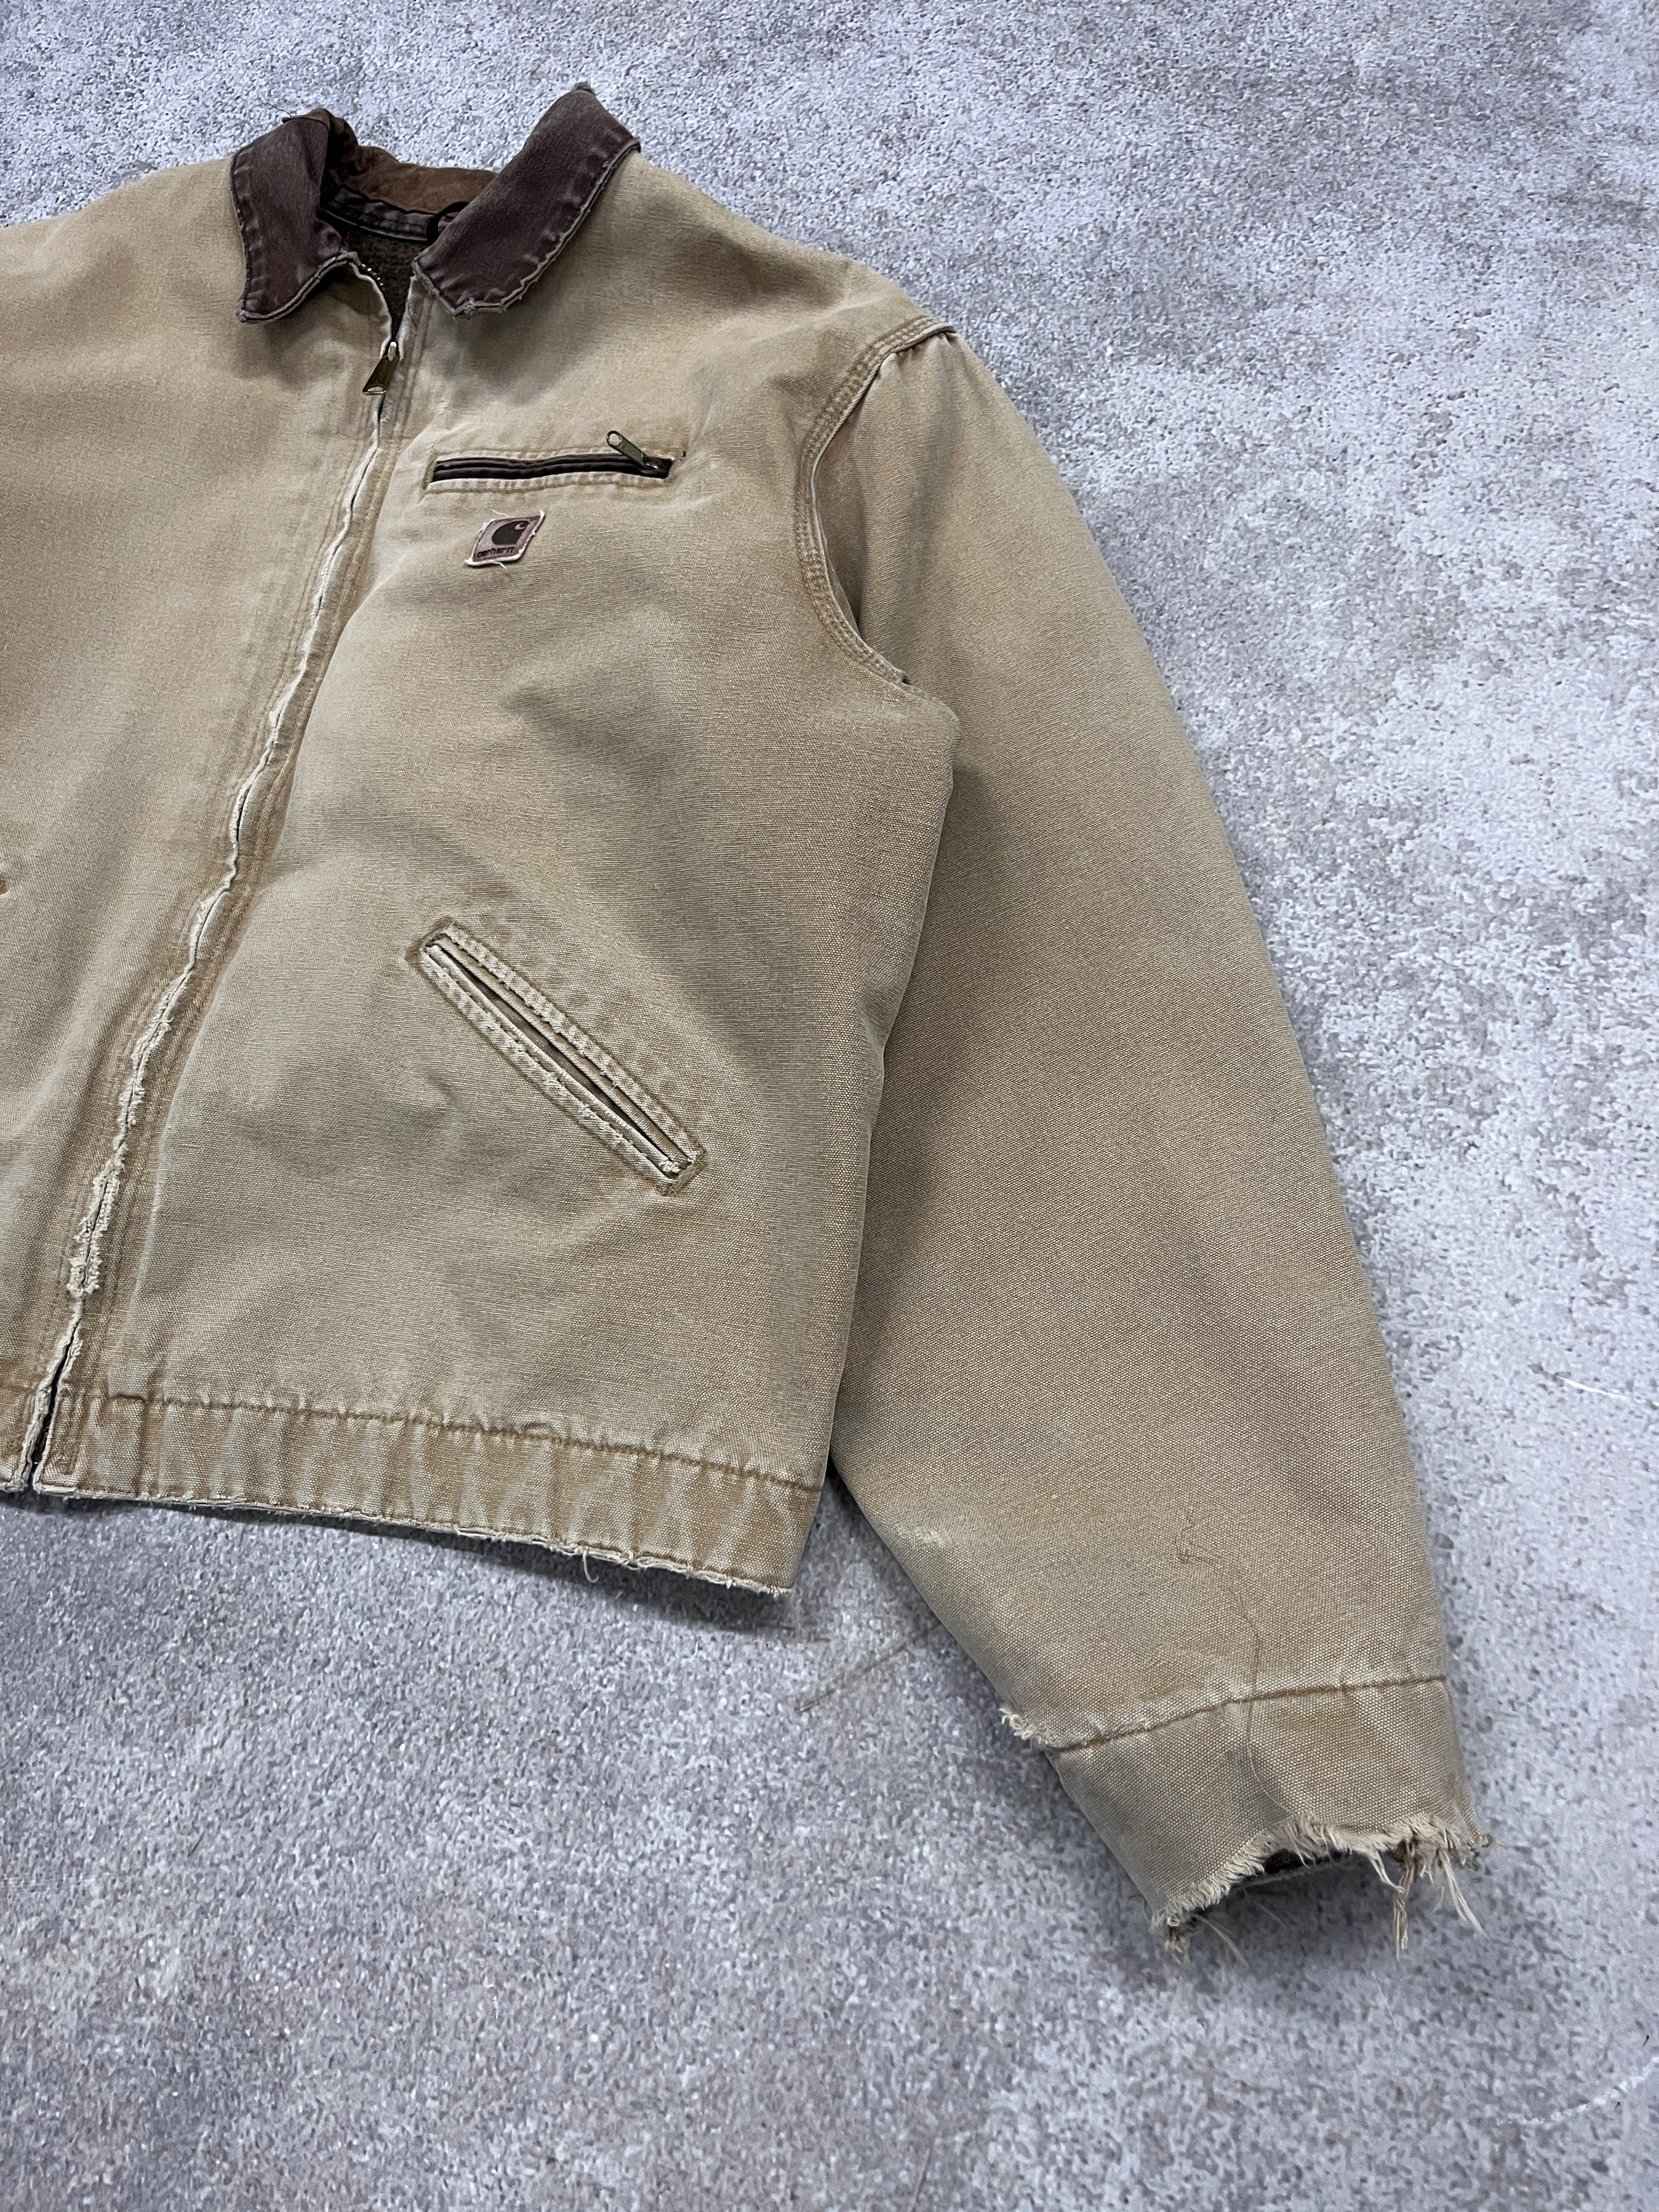 Vintage Workwear Jacket Beige // X-Large (Boxy) - RHAGHOUSE VINTAGE